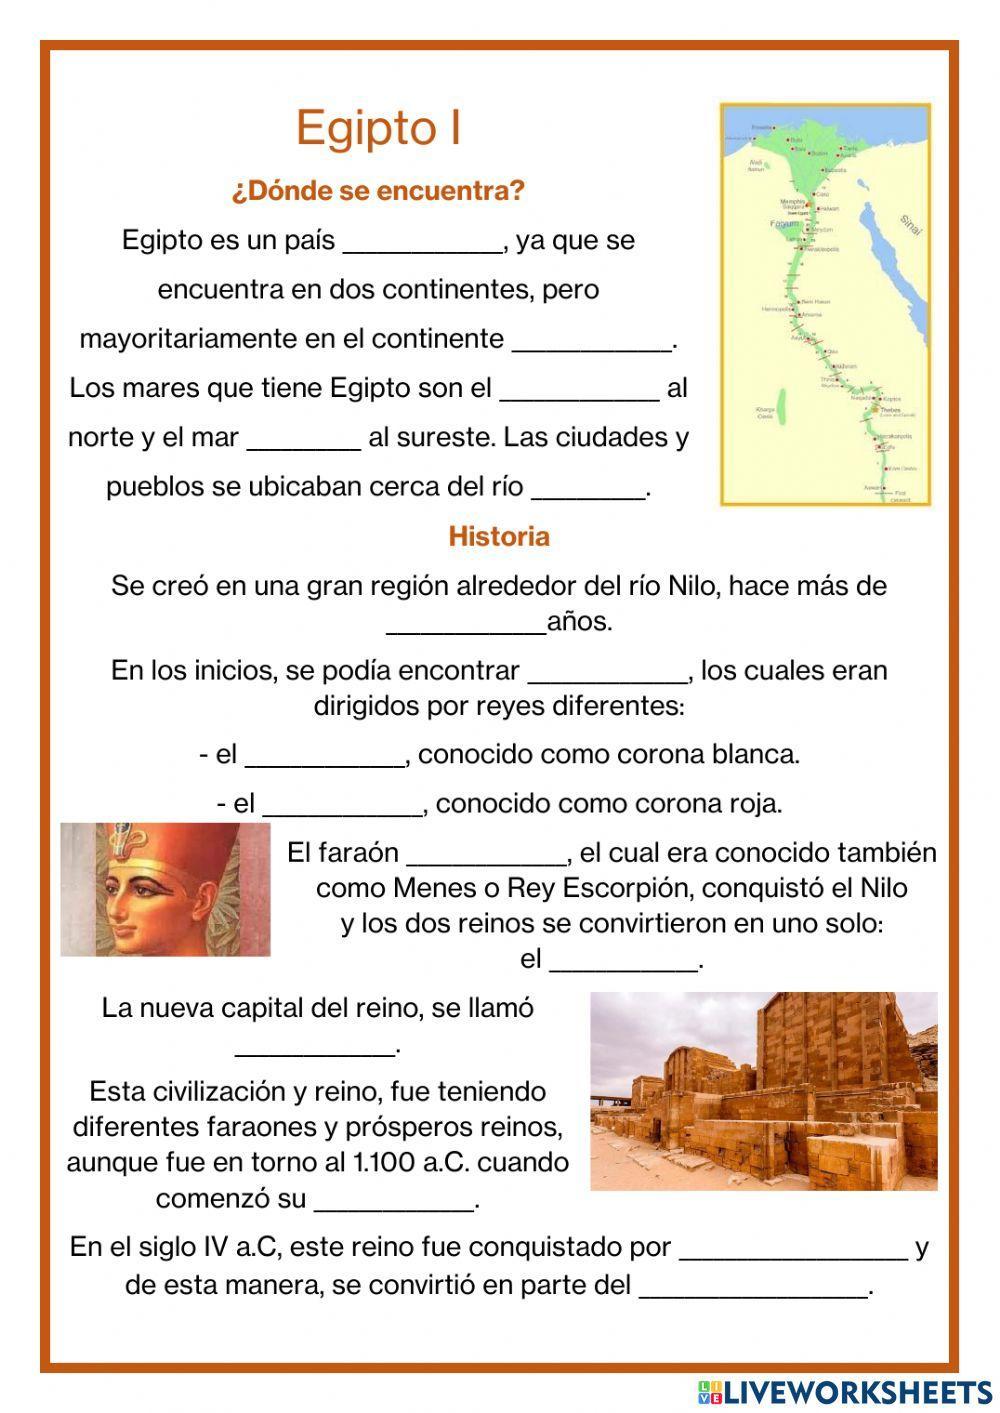 Egipto I